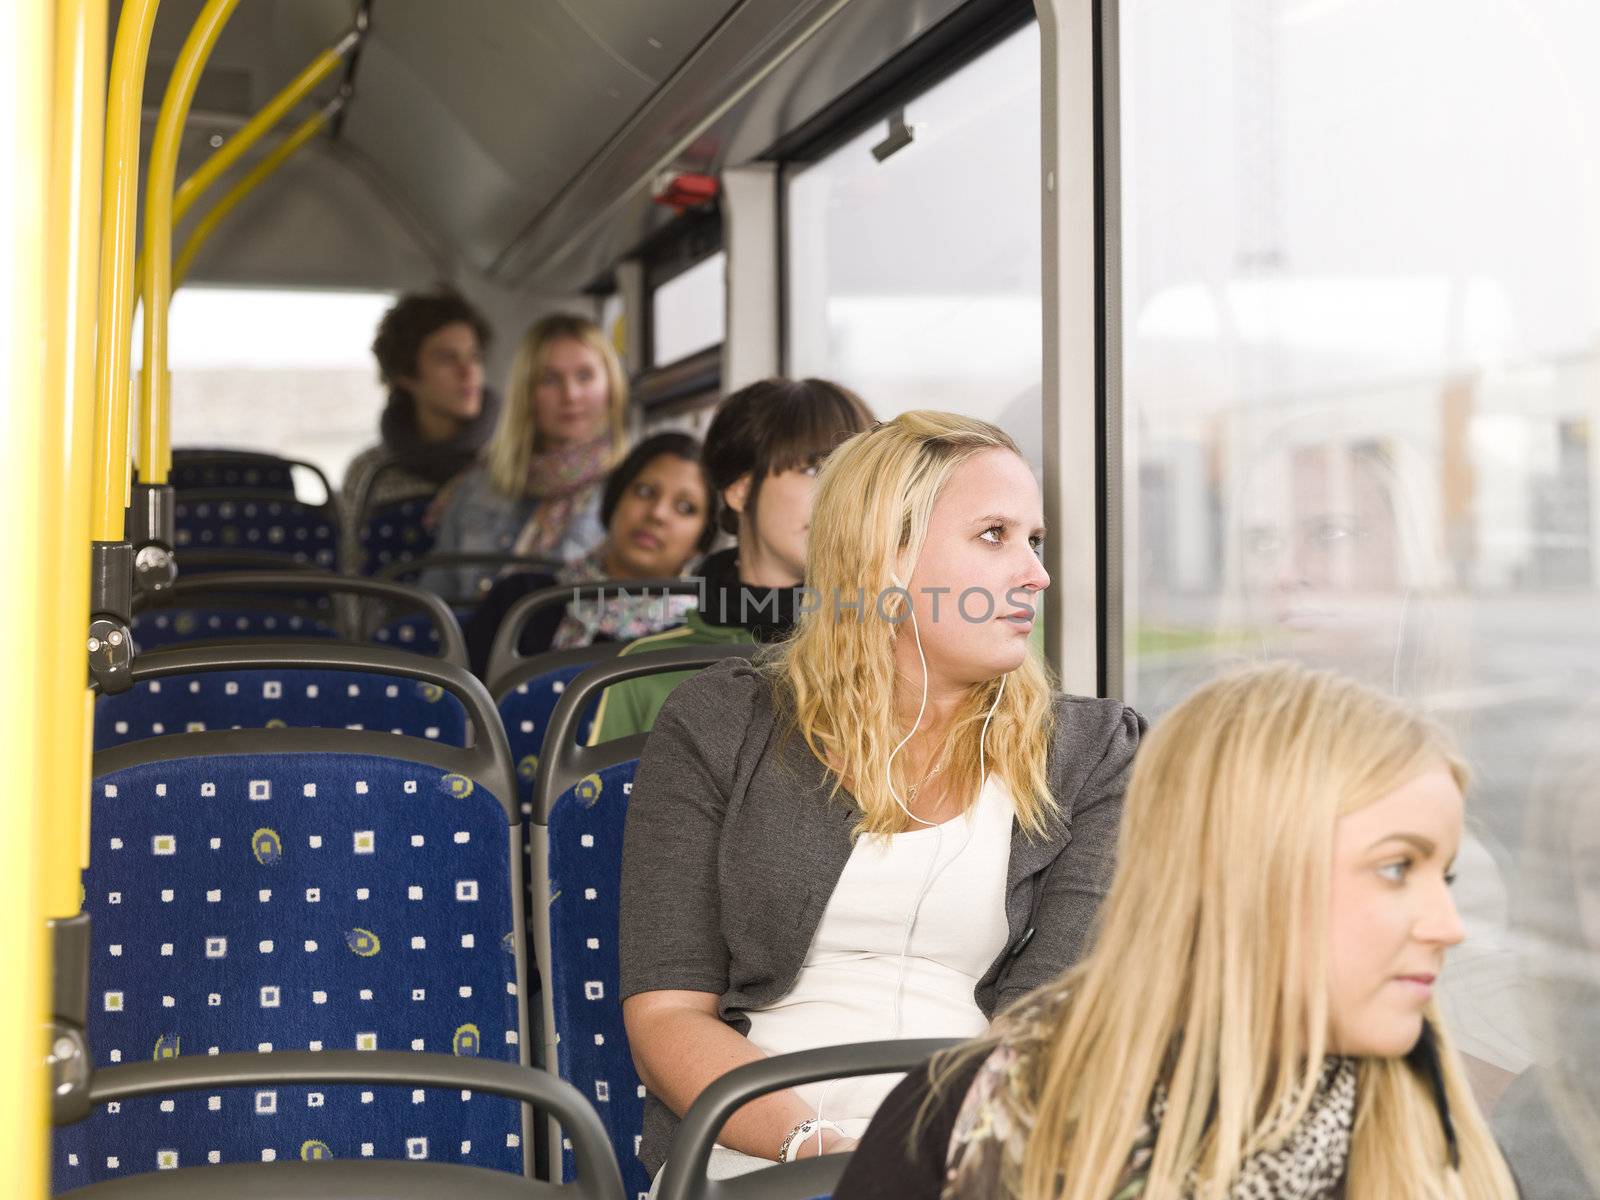 Women on the bus by gemenacom